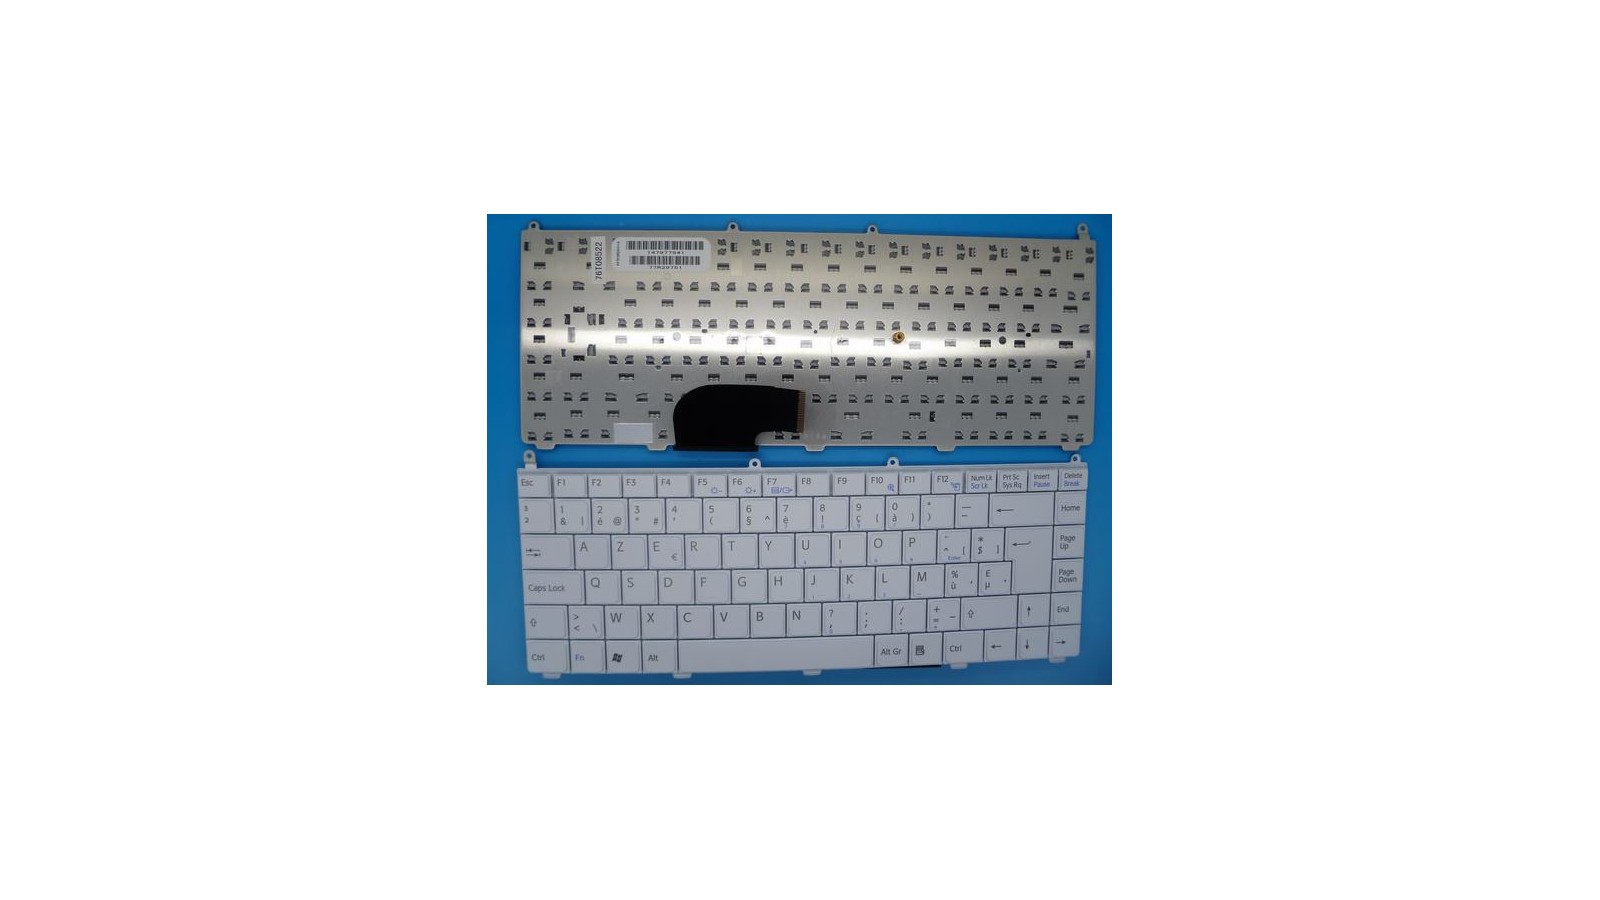 Tastiera compatibile con SONY VGN-FE VGN-AR serie bianca